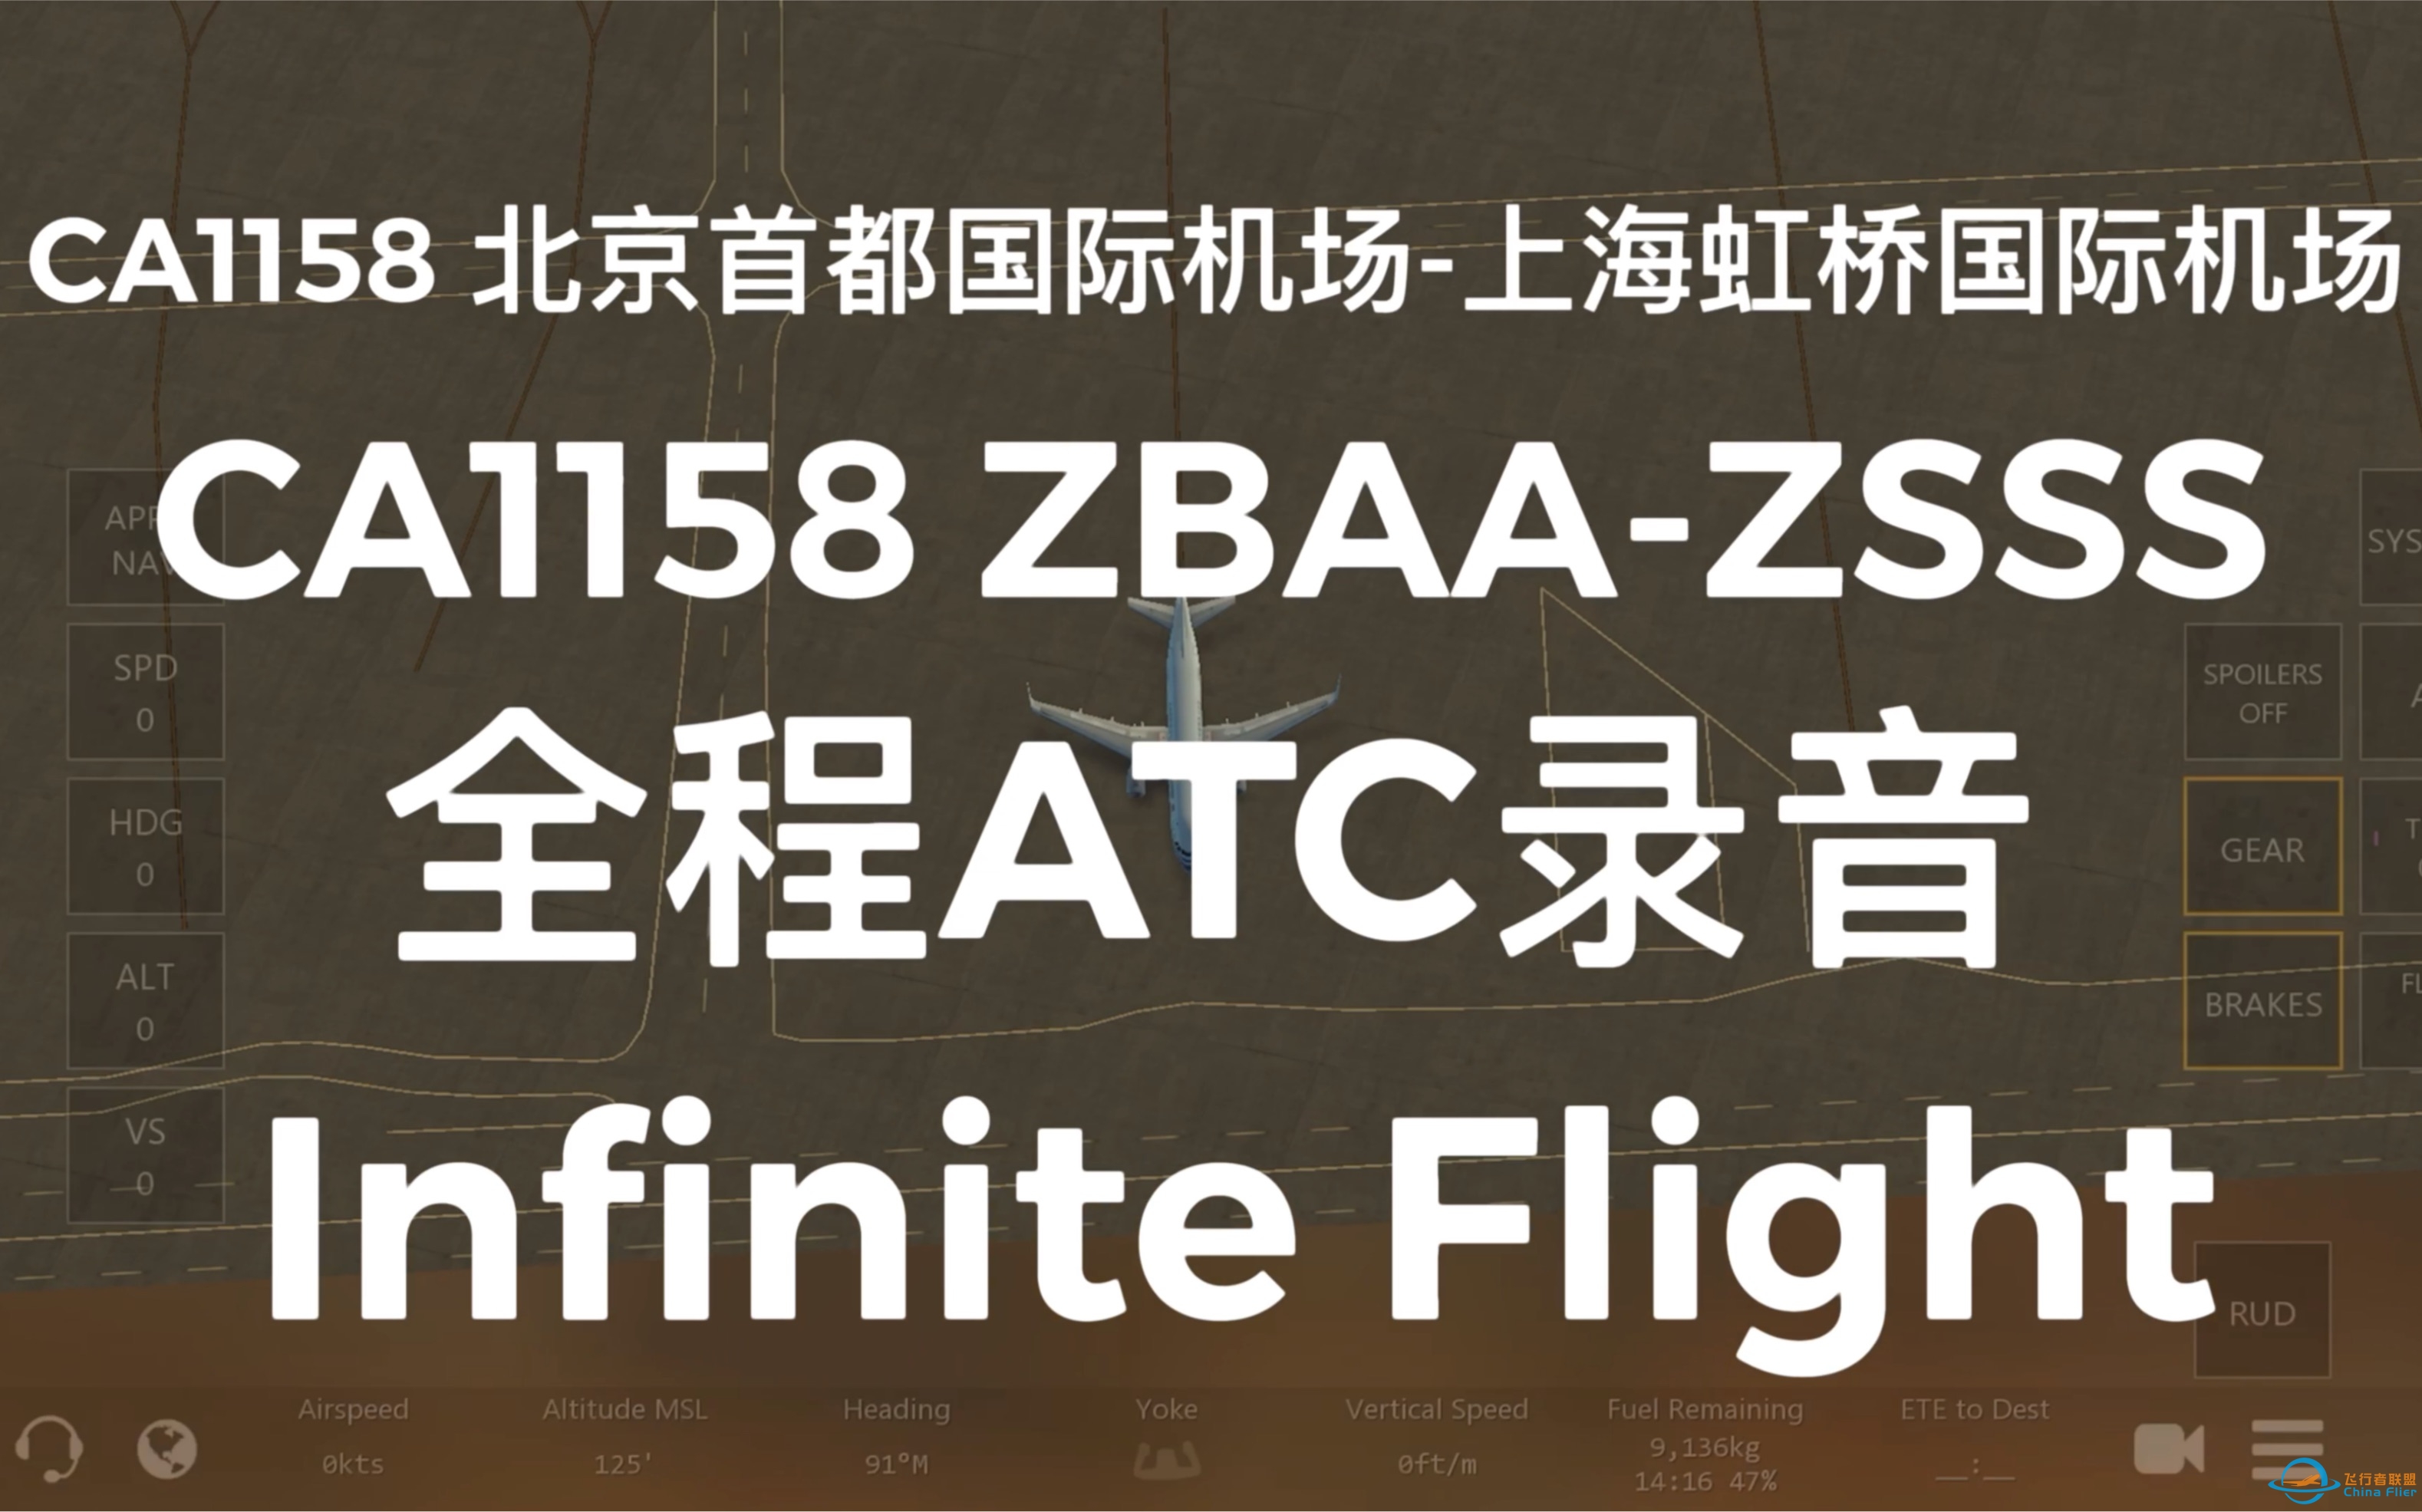 Infinite Flight CCA1158 北京首都PEK-上海虹桥SHA 飞行实录 （全程ATC录音）Part 1-7061 